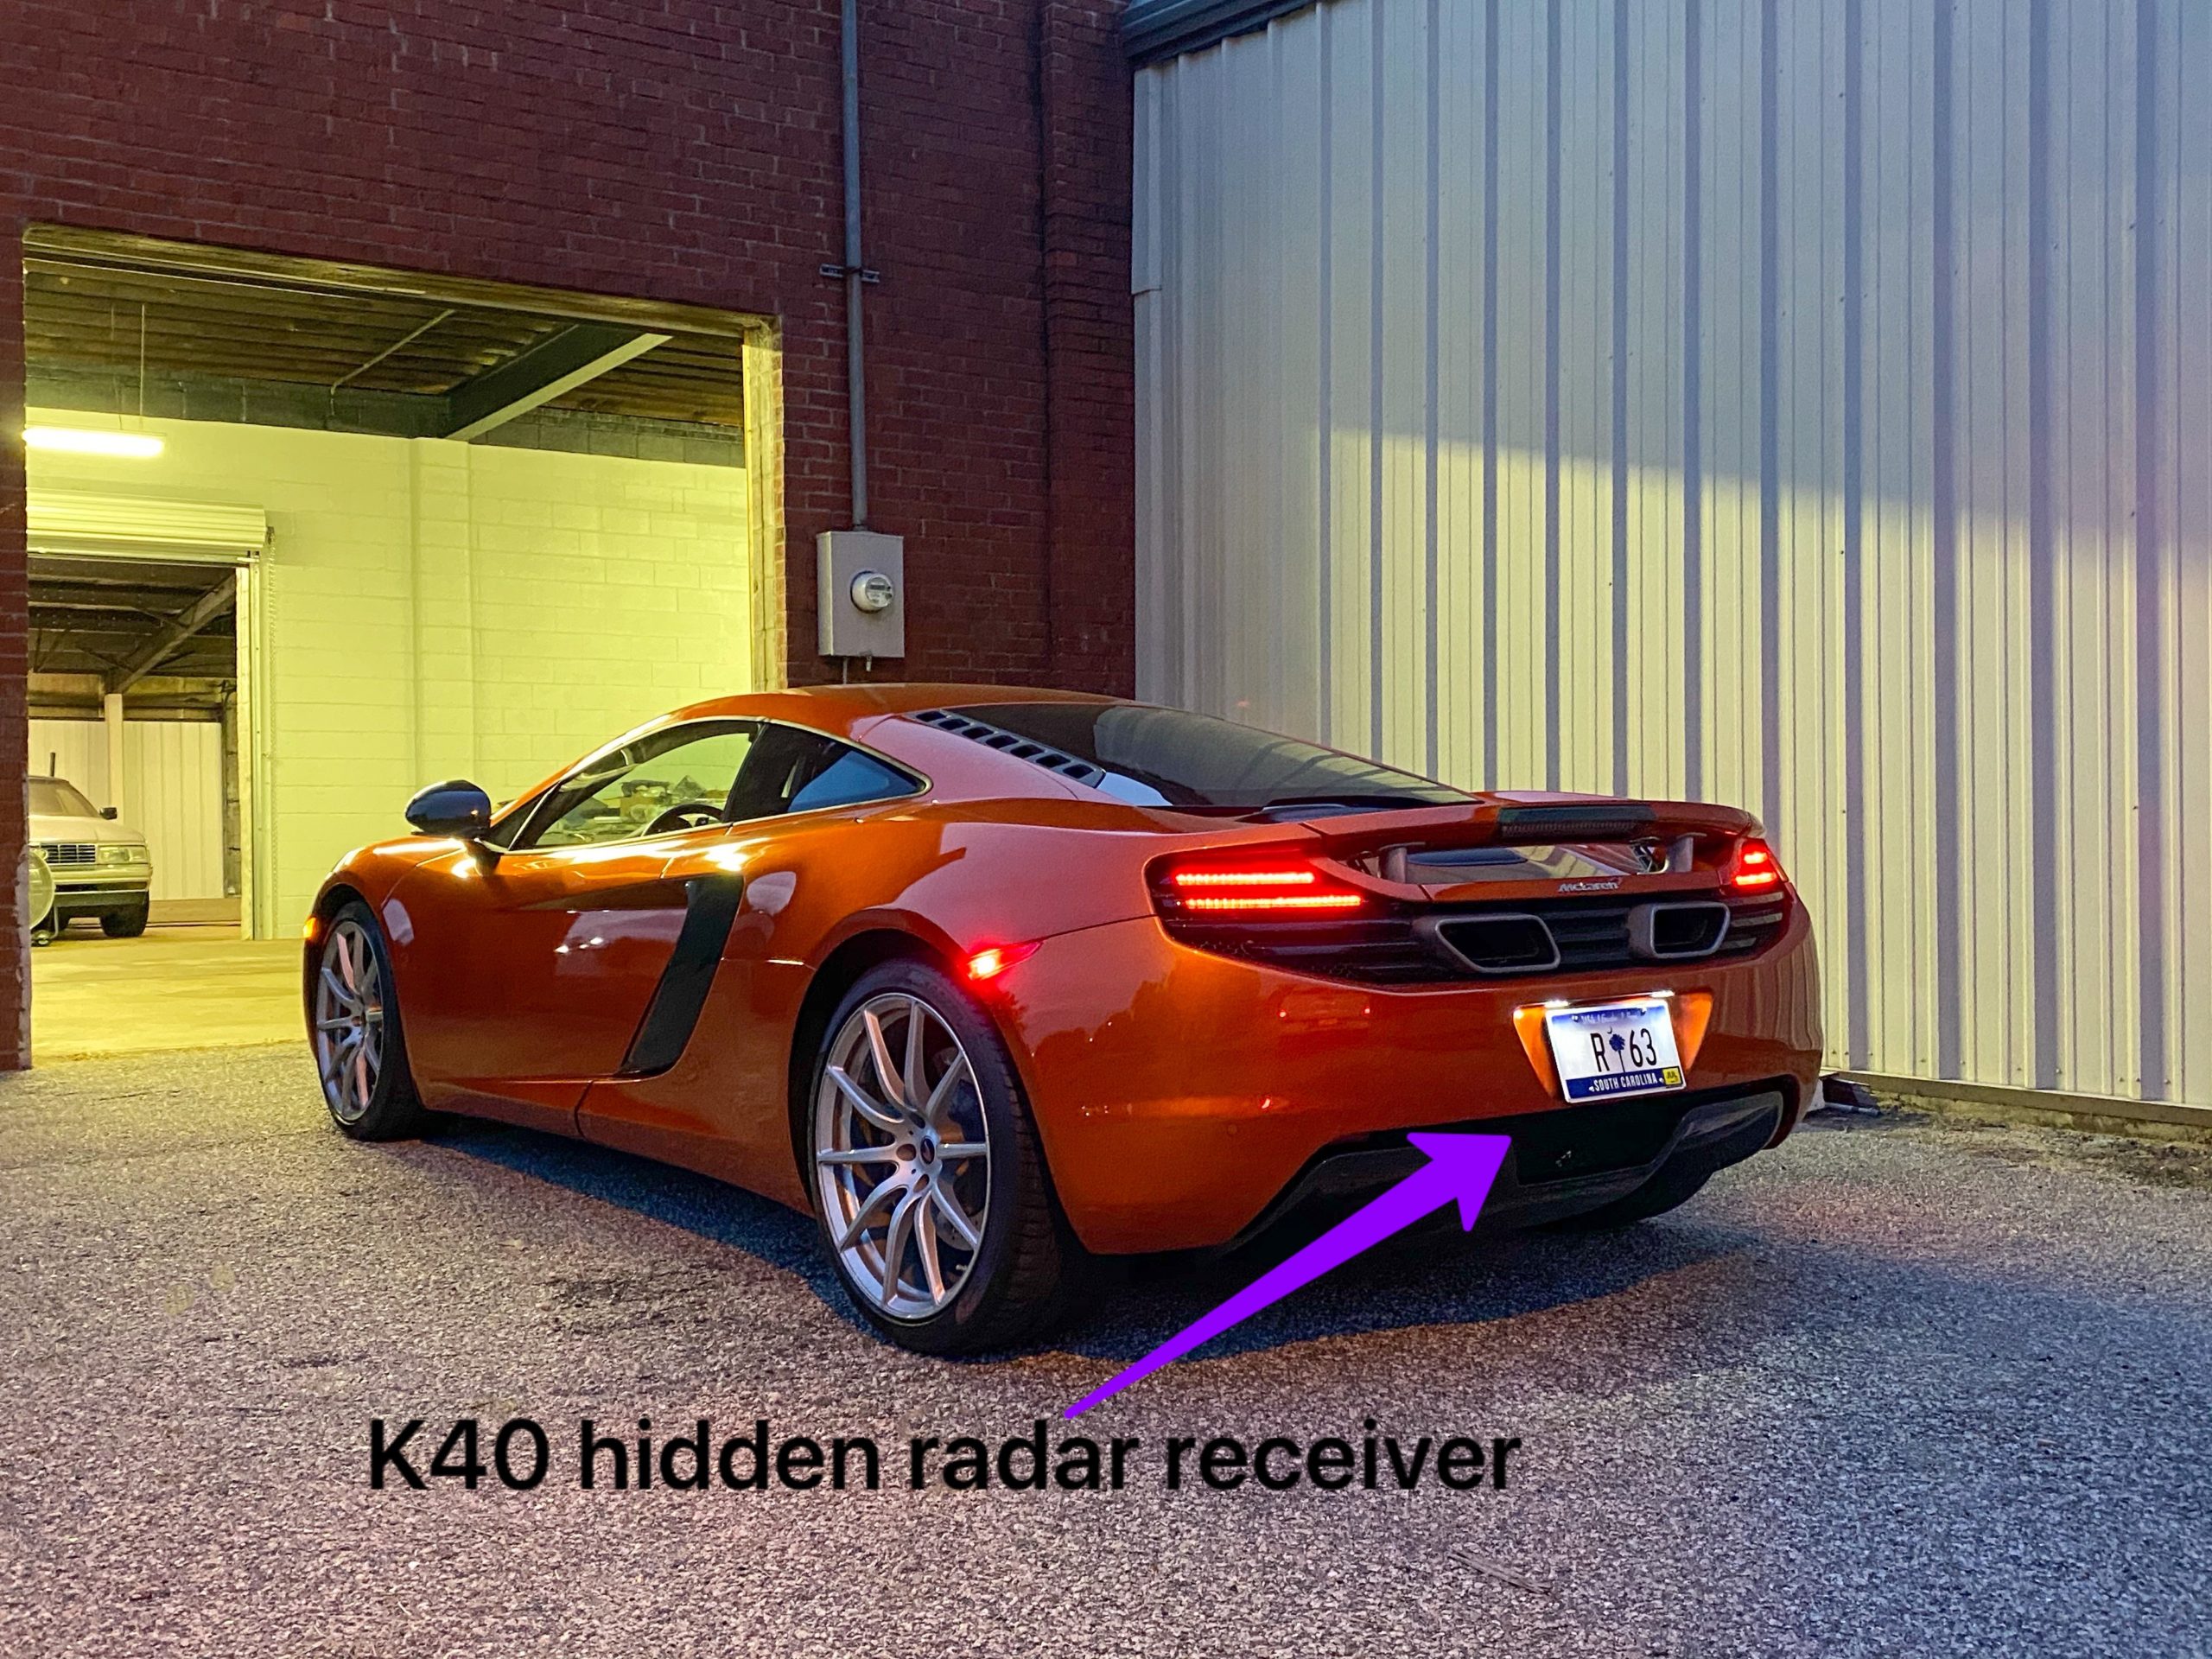 k40 radar receiver on a 23012 McLaren